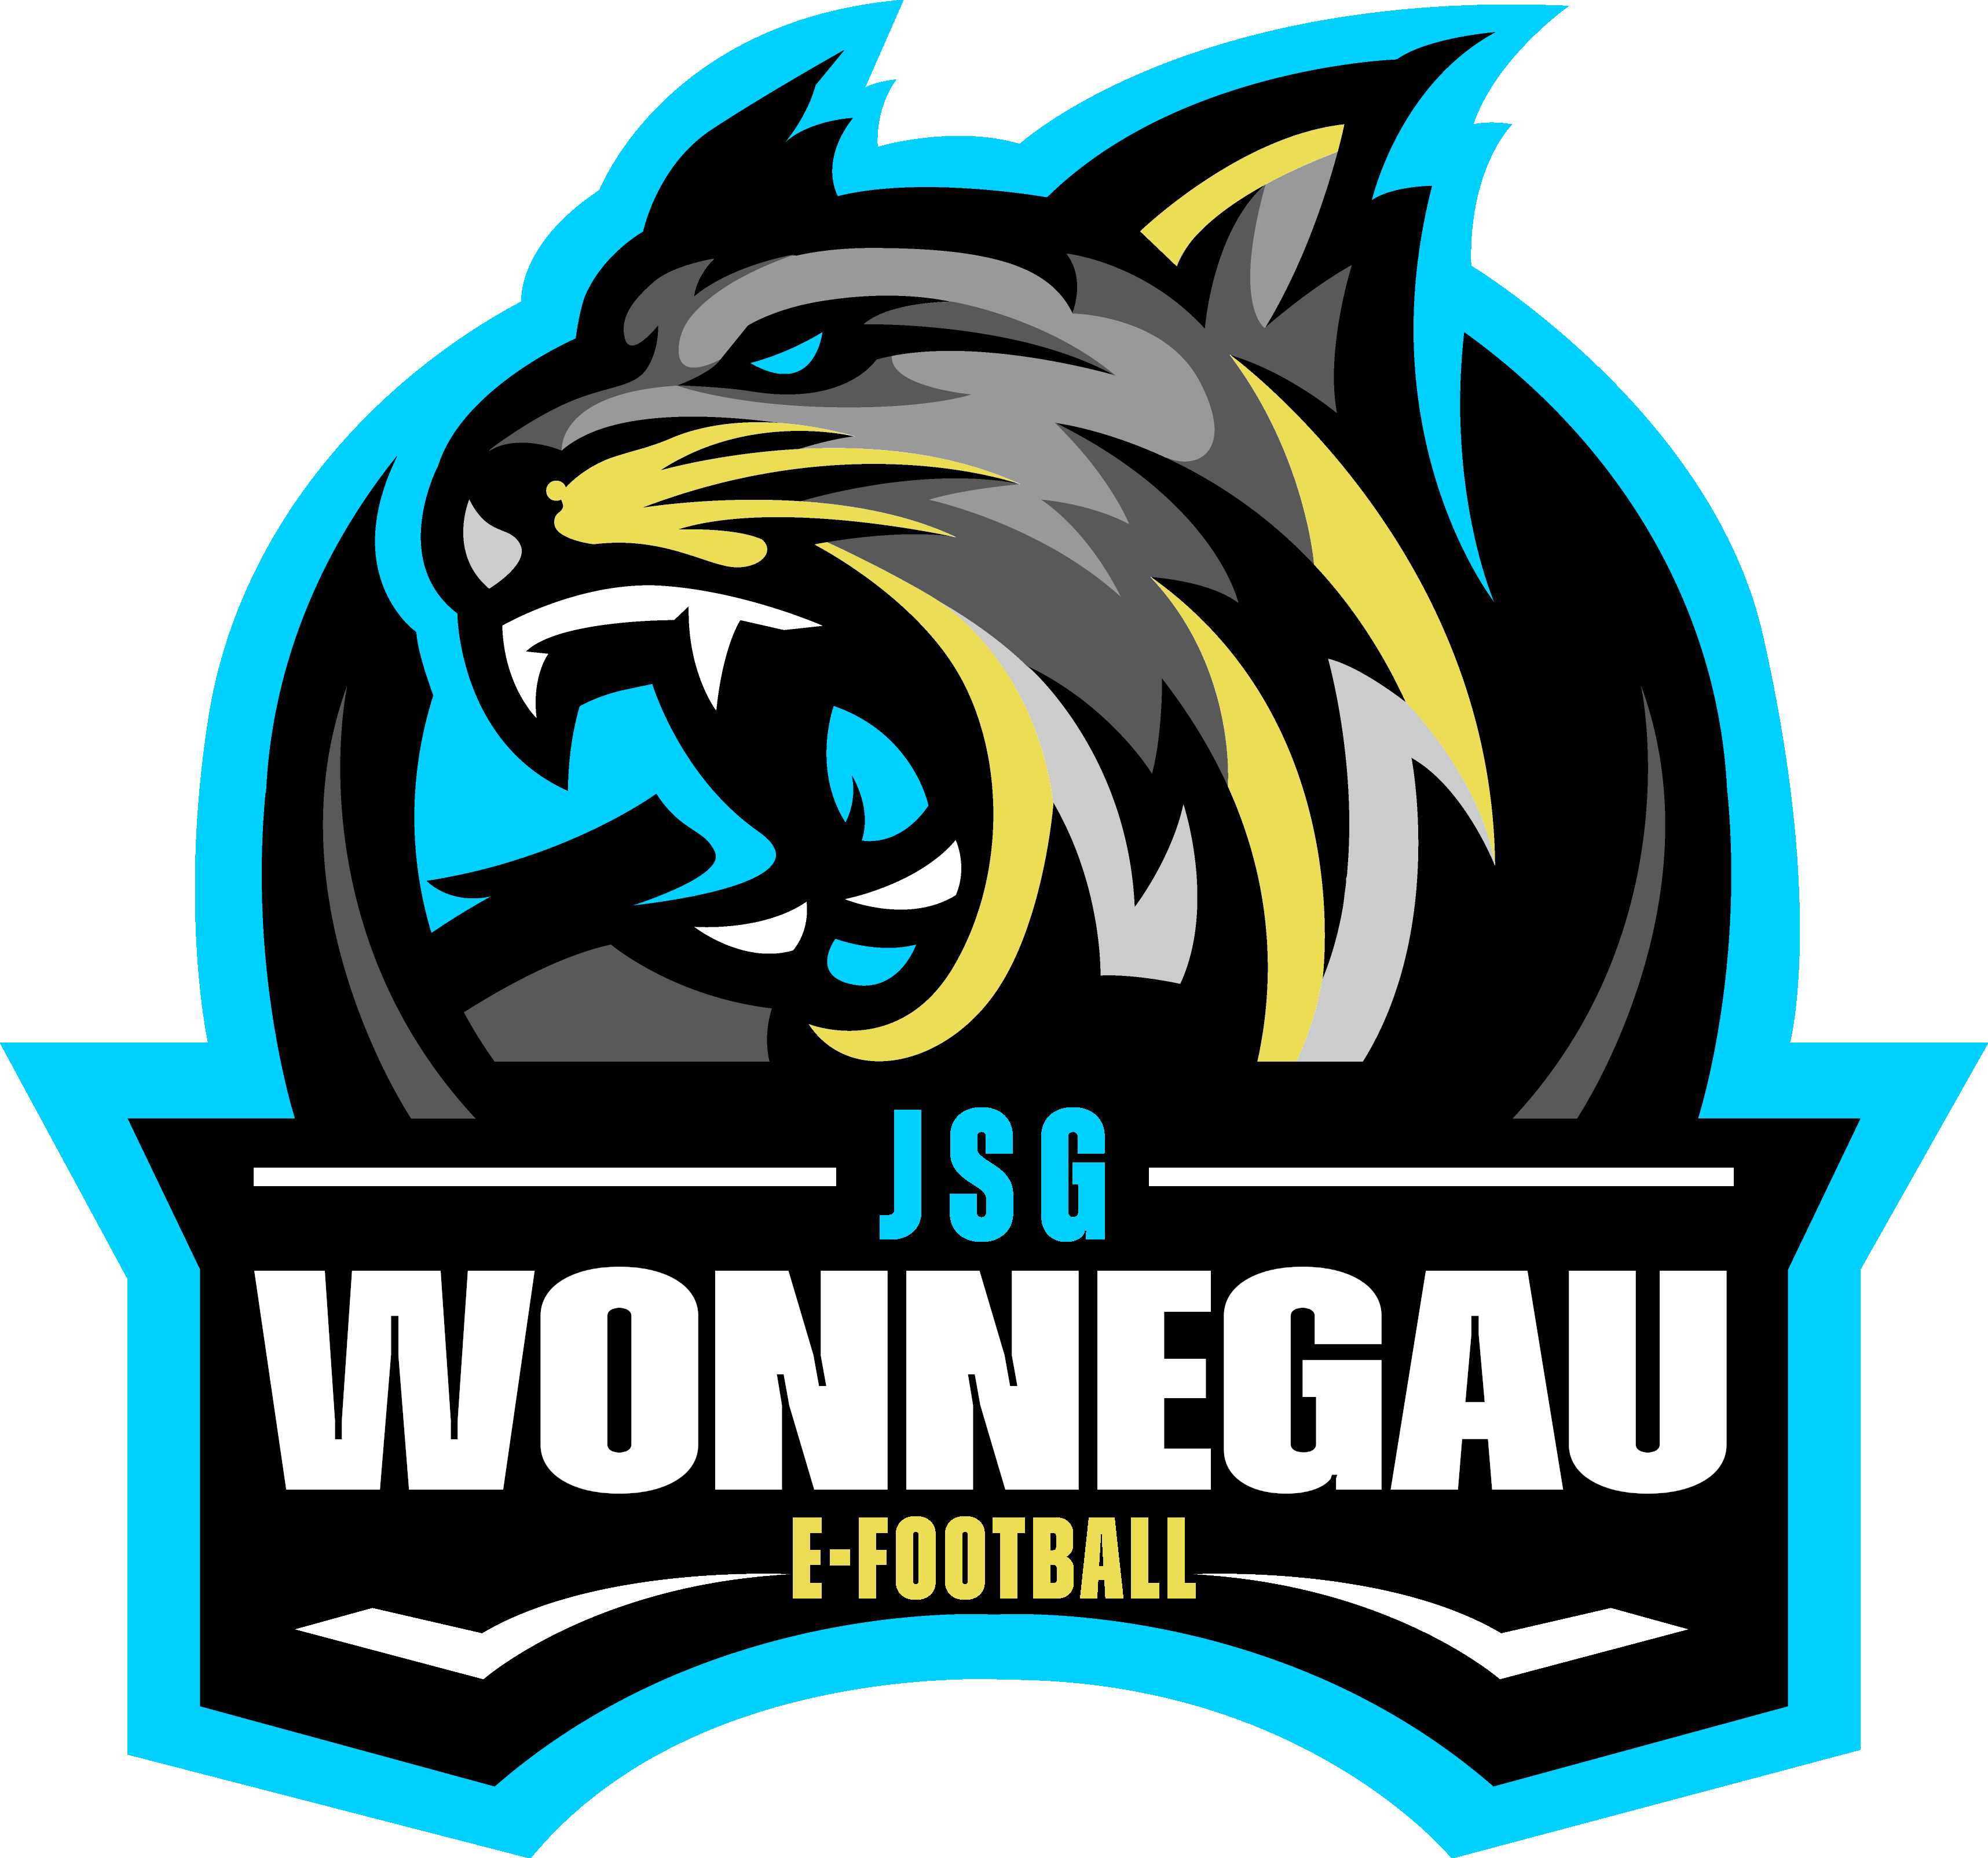 JSG Wonnegau eFOOTBALL